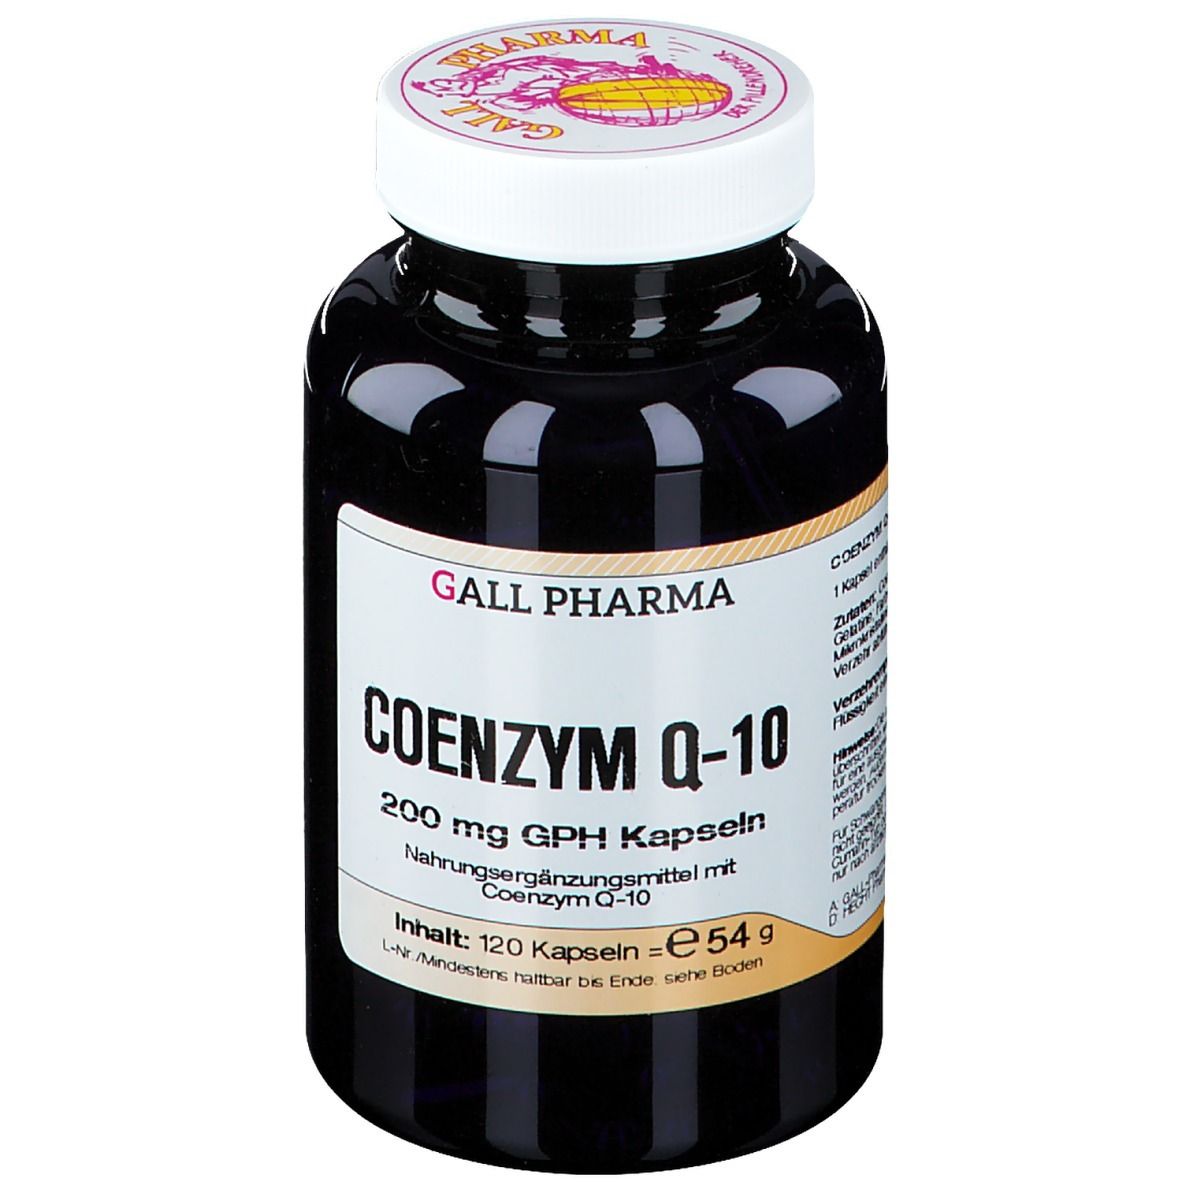 GALL PHARMA Coenzym Q-10 200 mg GPH Kapseln